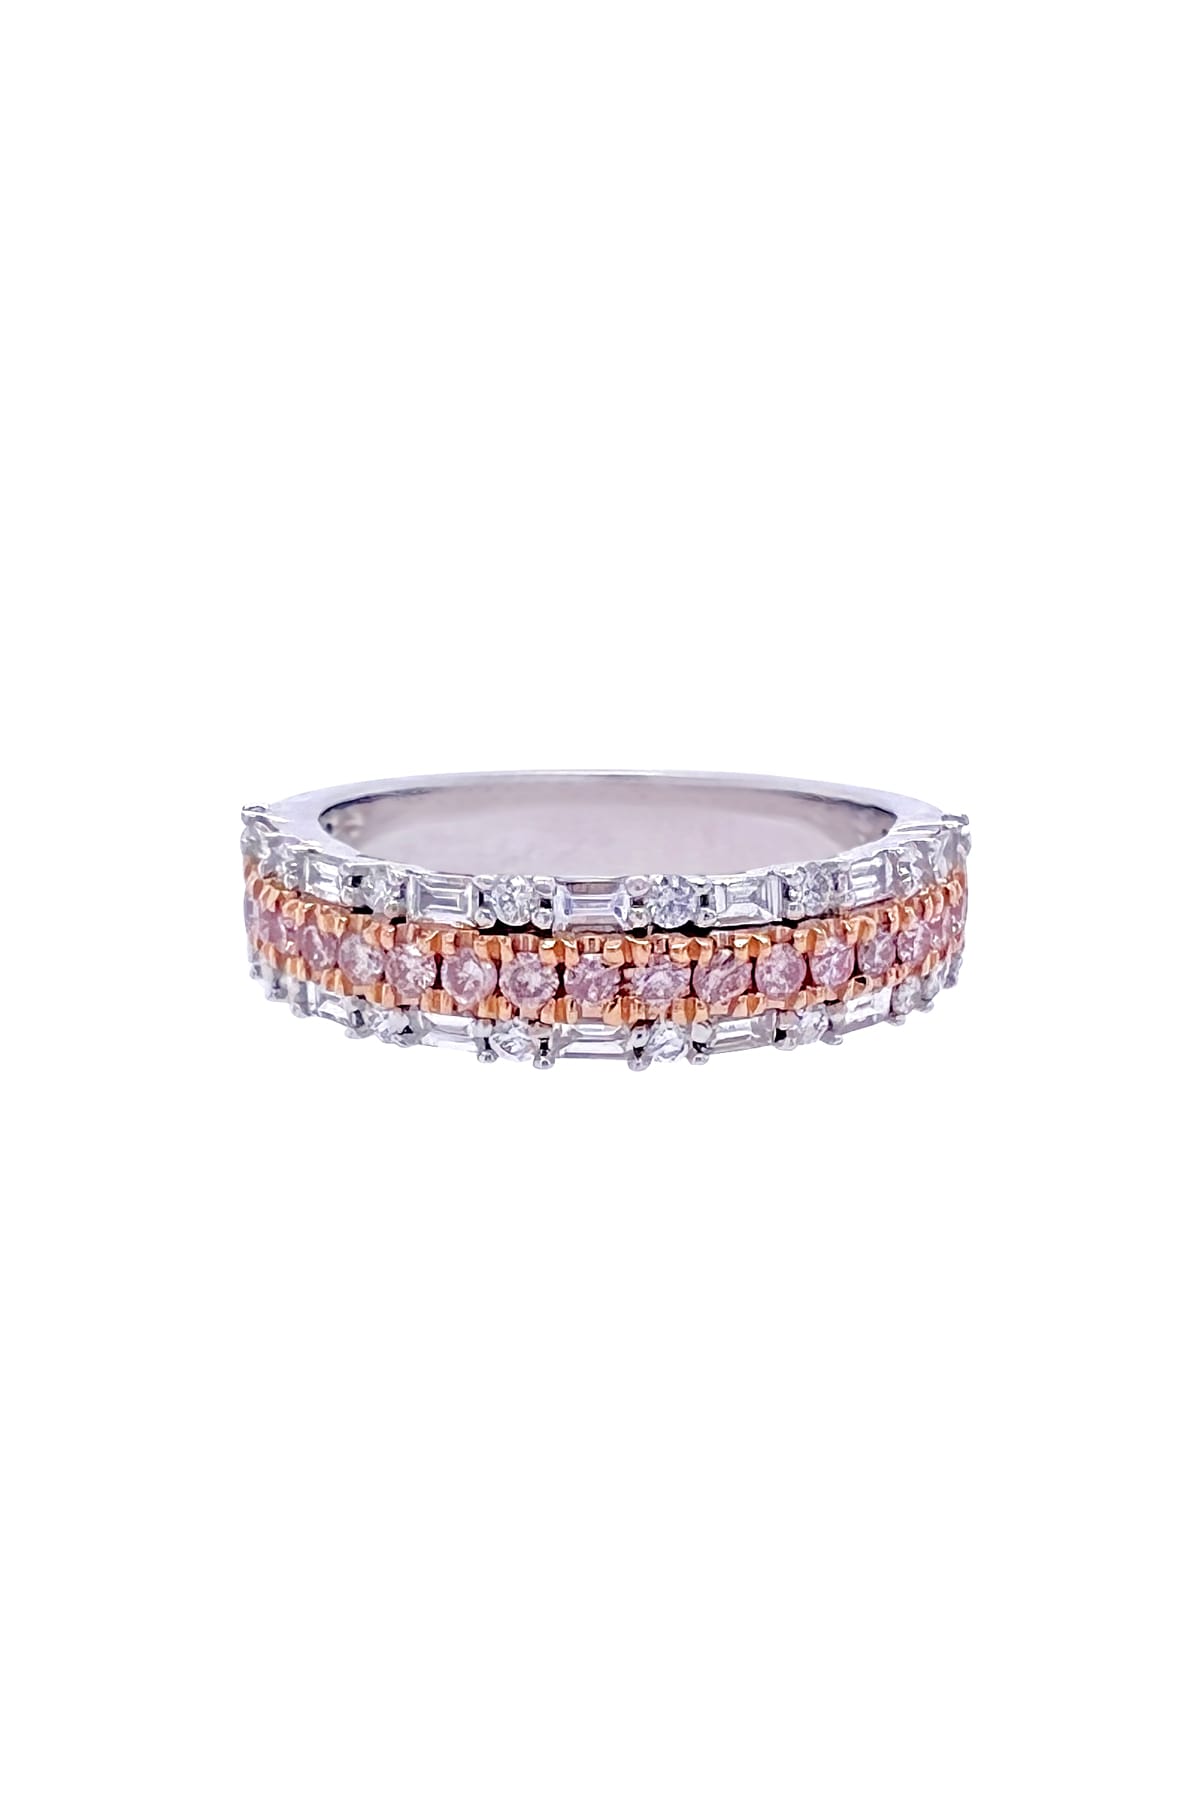 18 Carat Gold Diamond Set Ring With Pink Diamonds available at LeGassick Diamonds and Jewellery Gold Coast, Australia.